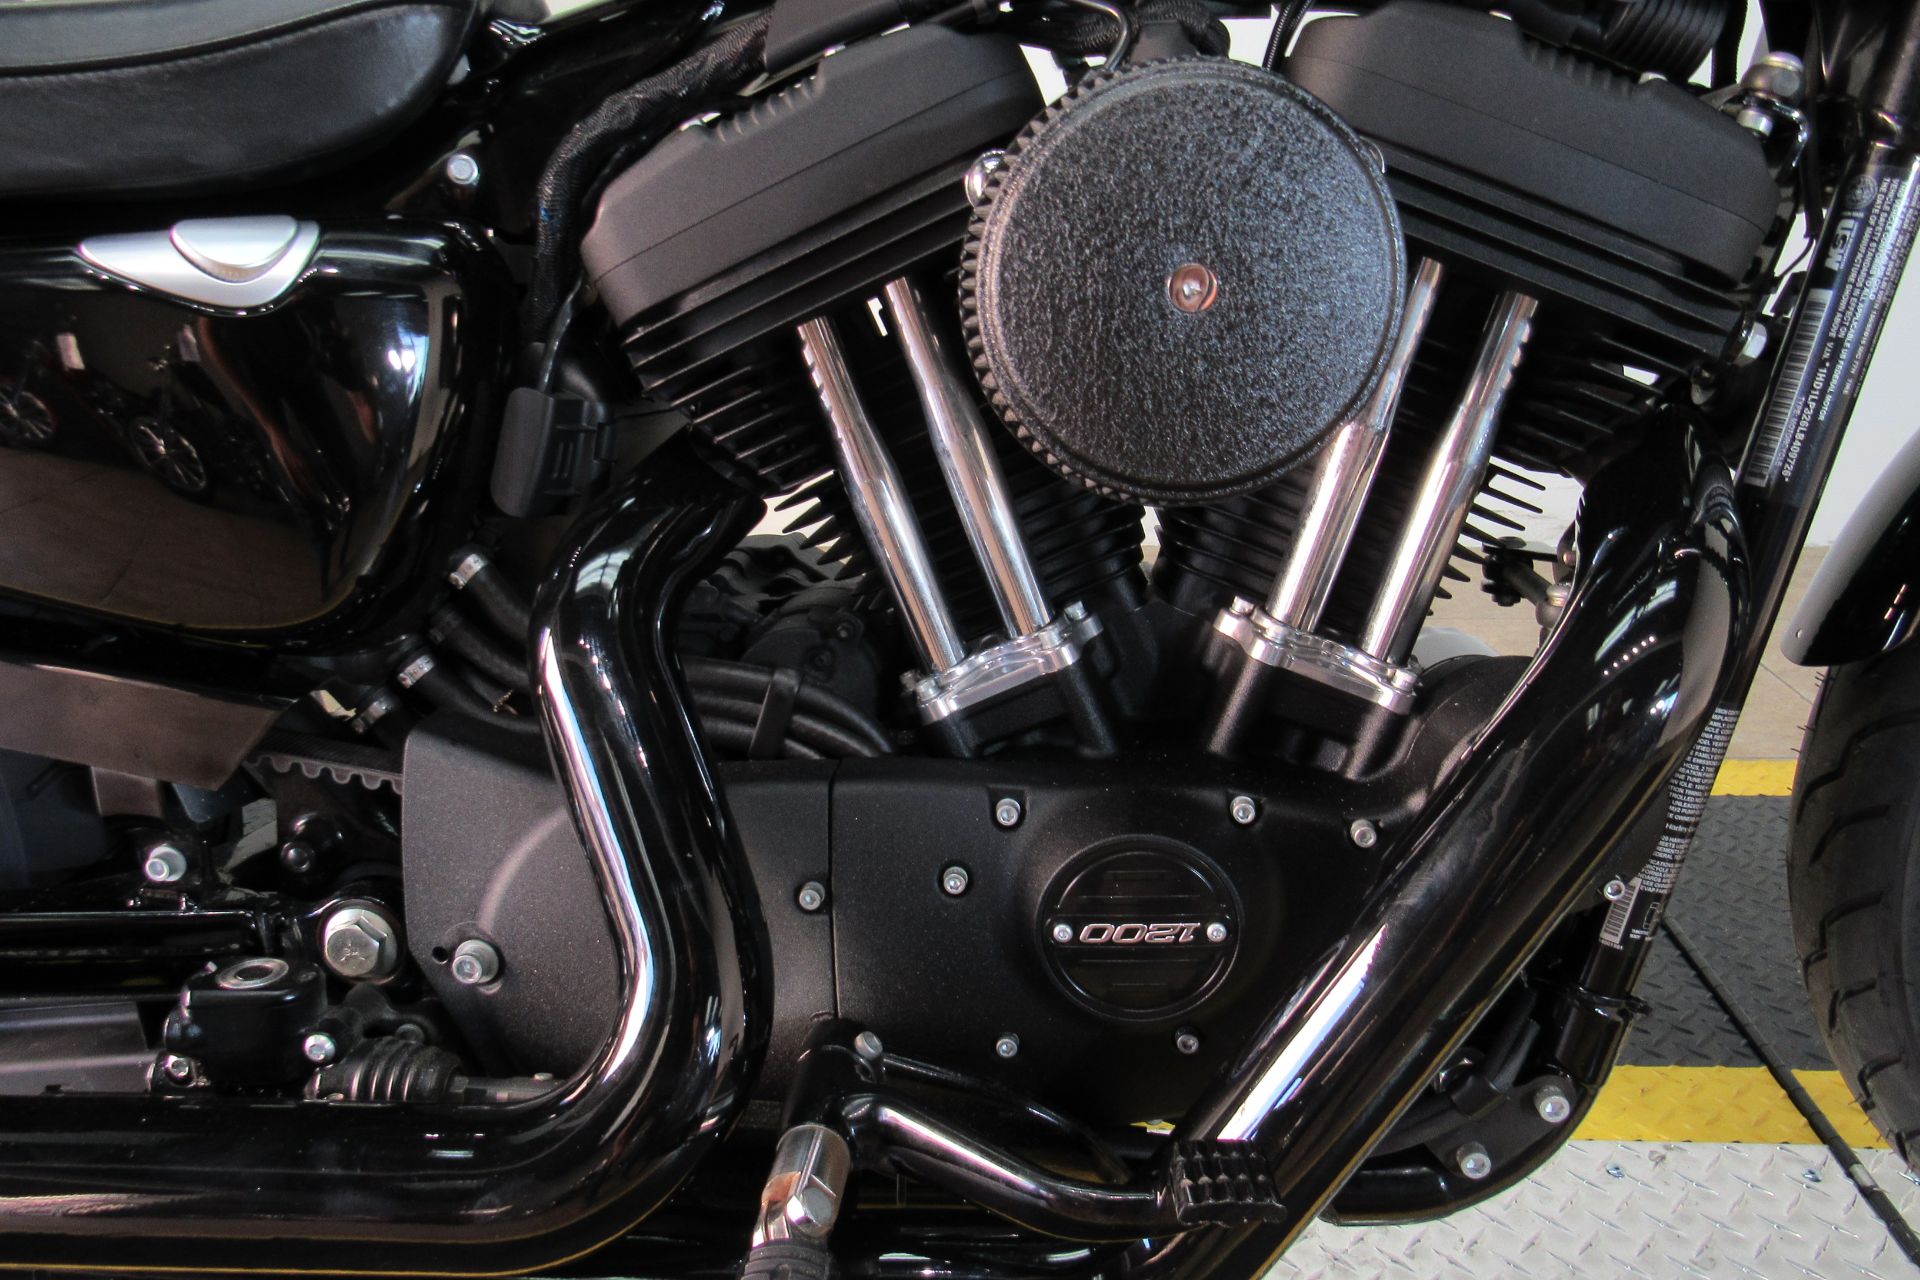 2020 Harley-Davidson Iron 1200™ in Temecula, California - Photo 11